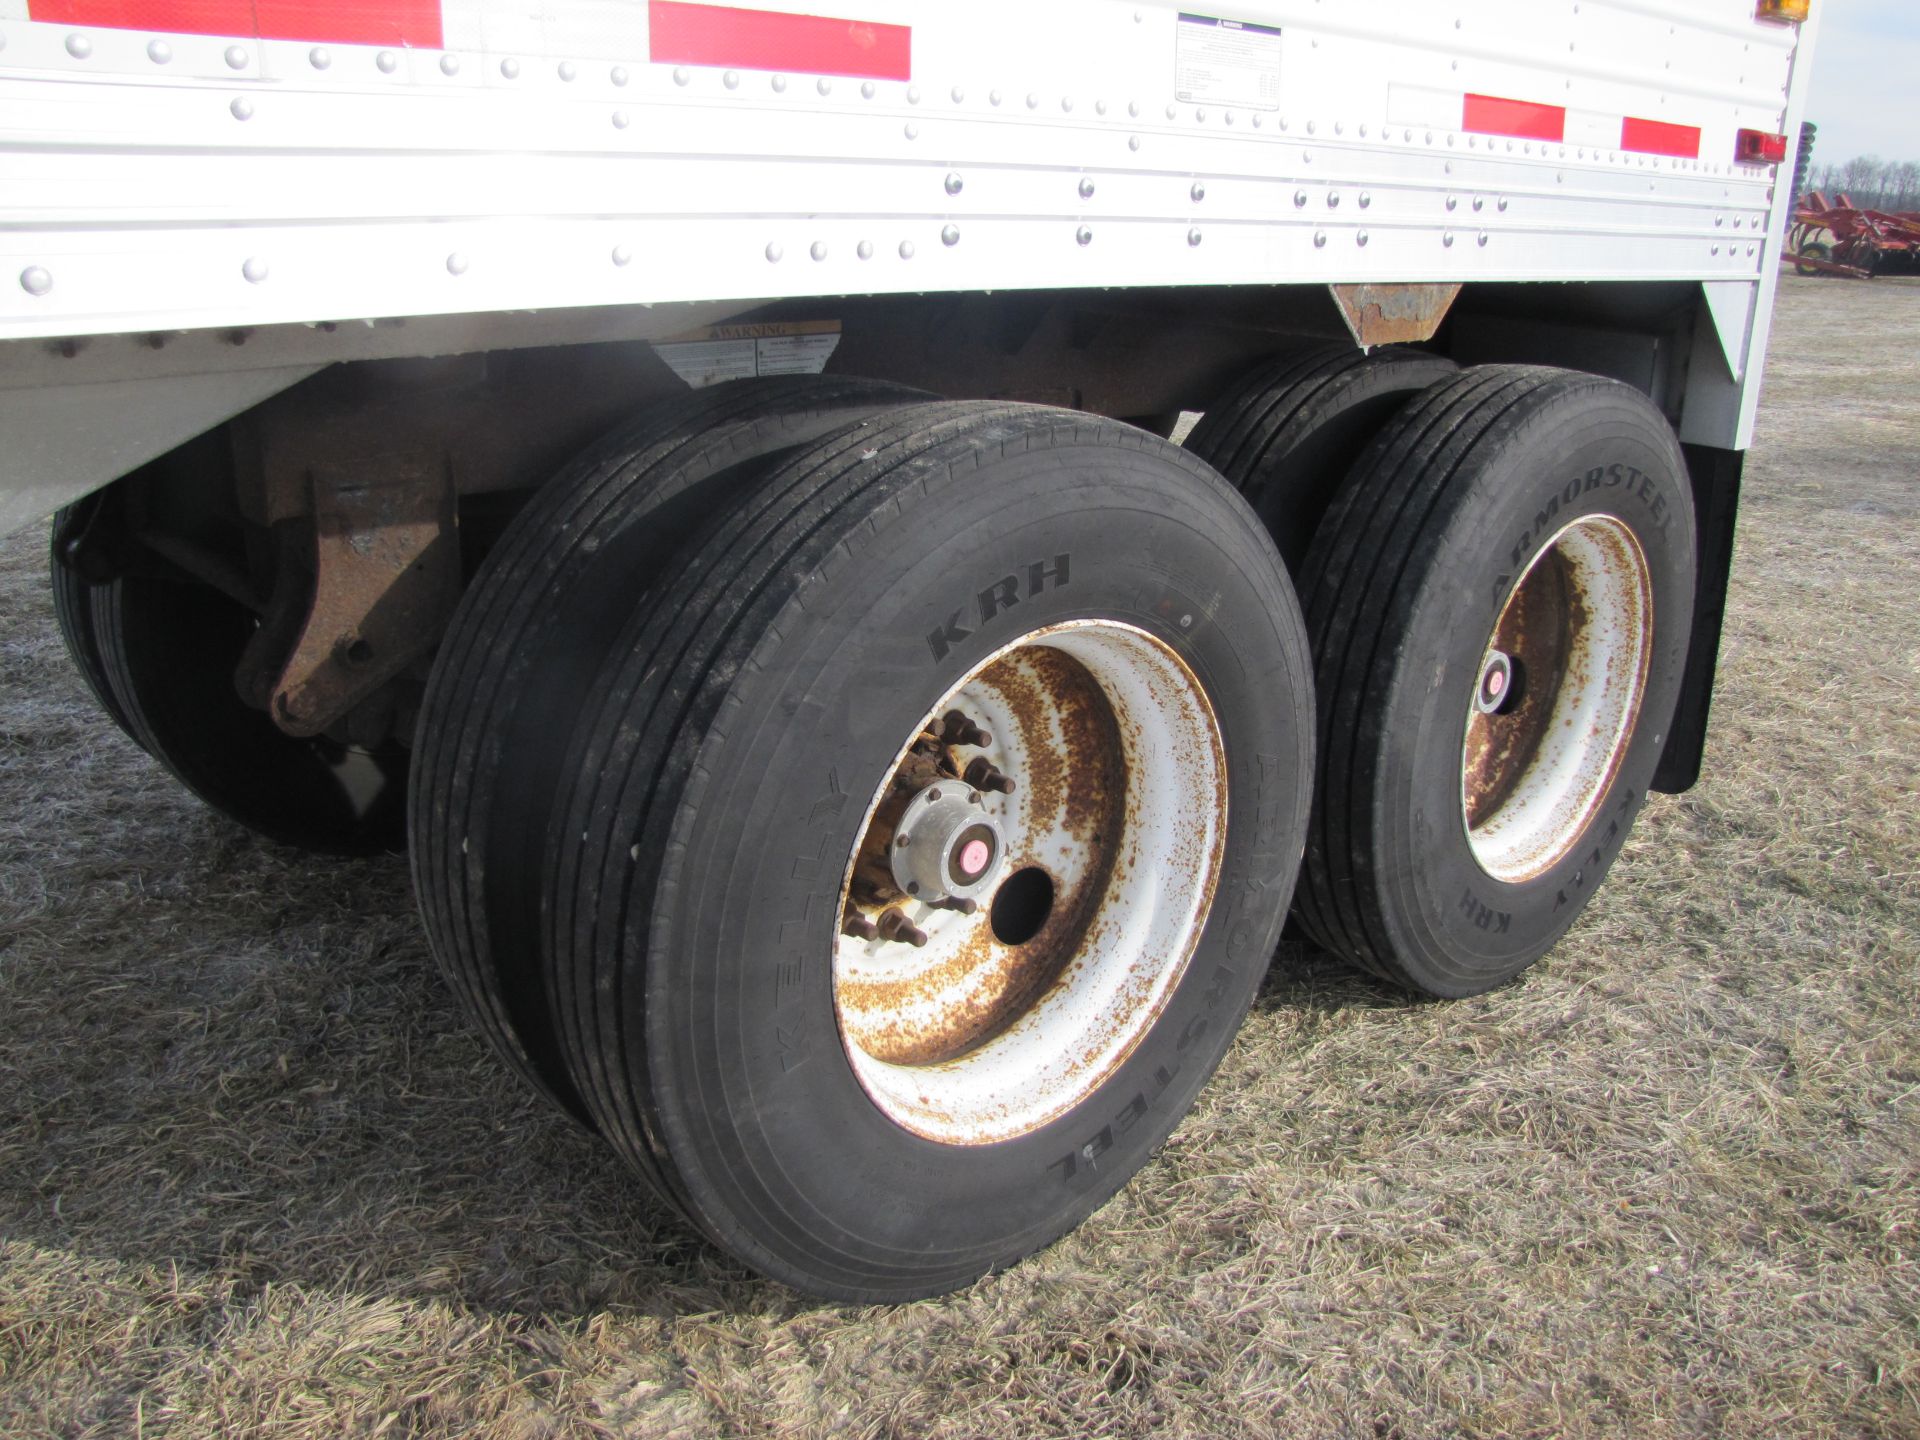 34’ 2006 Timpte hopper bottom, 11R24.5L tires, roll tarp, VIN 1TDH335206B108993 - Image 29 of 34